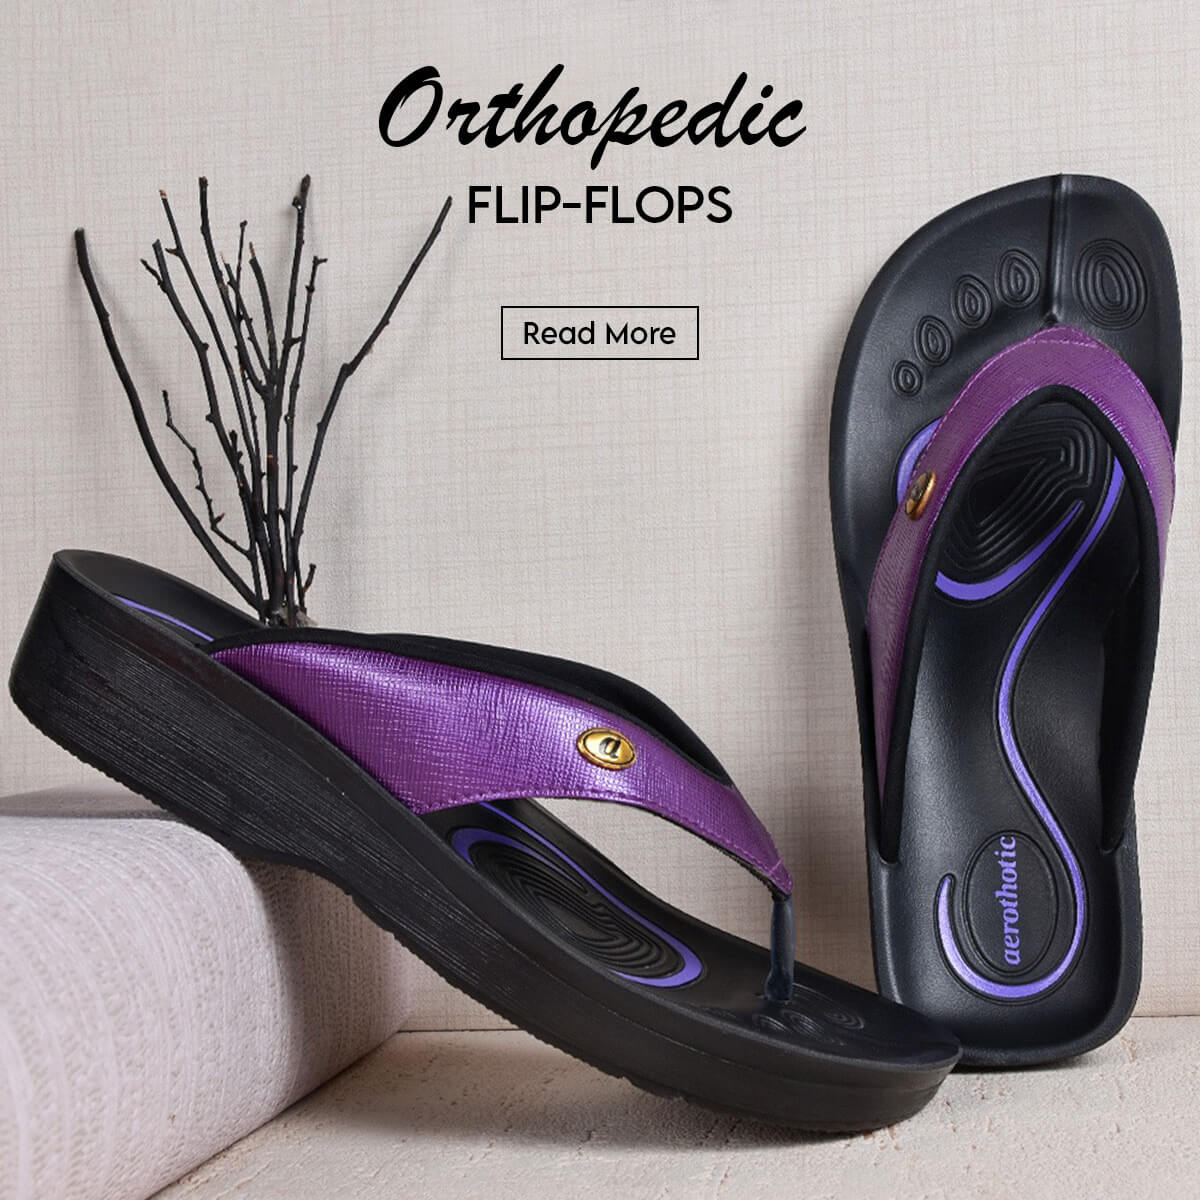 Orthopedic Flip Flops &#038; Style Maintenance! Really?